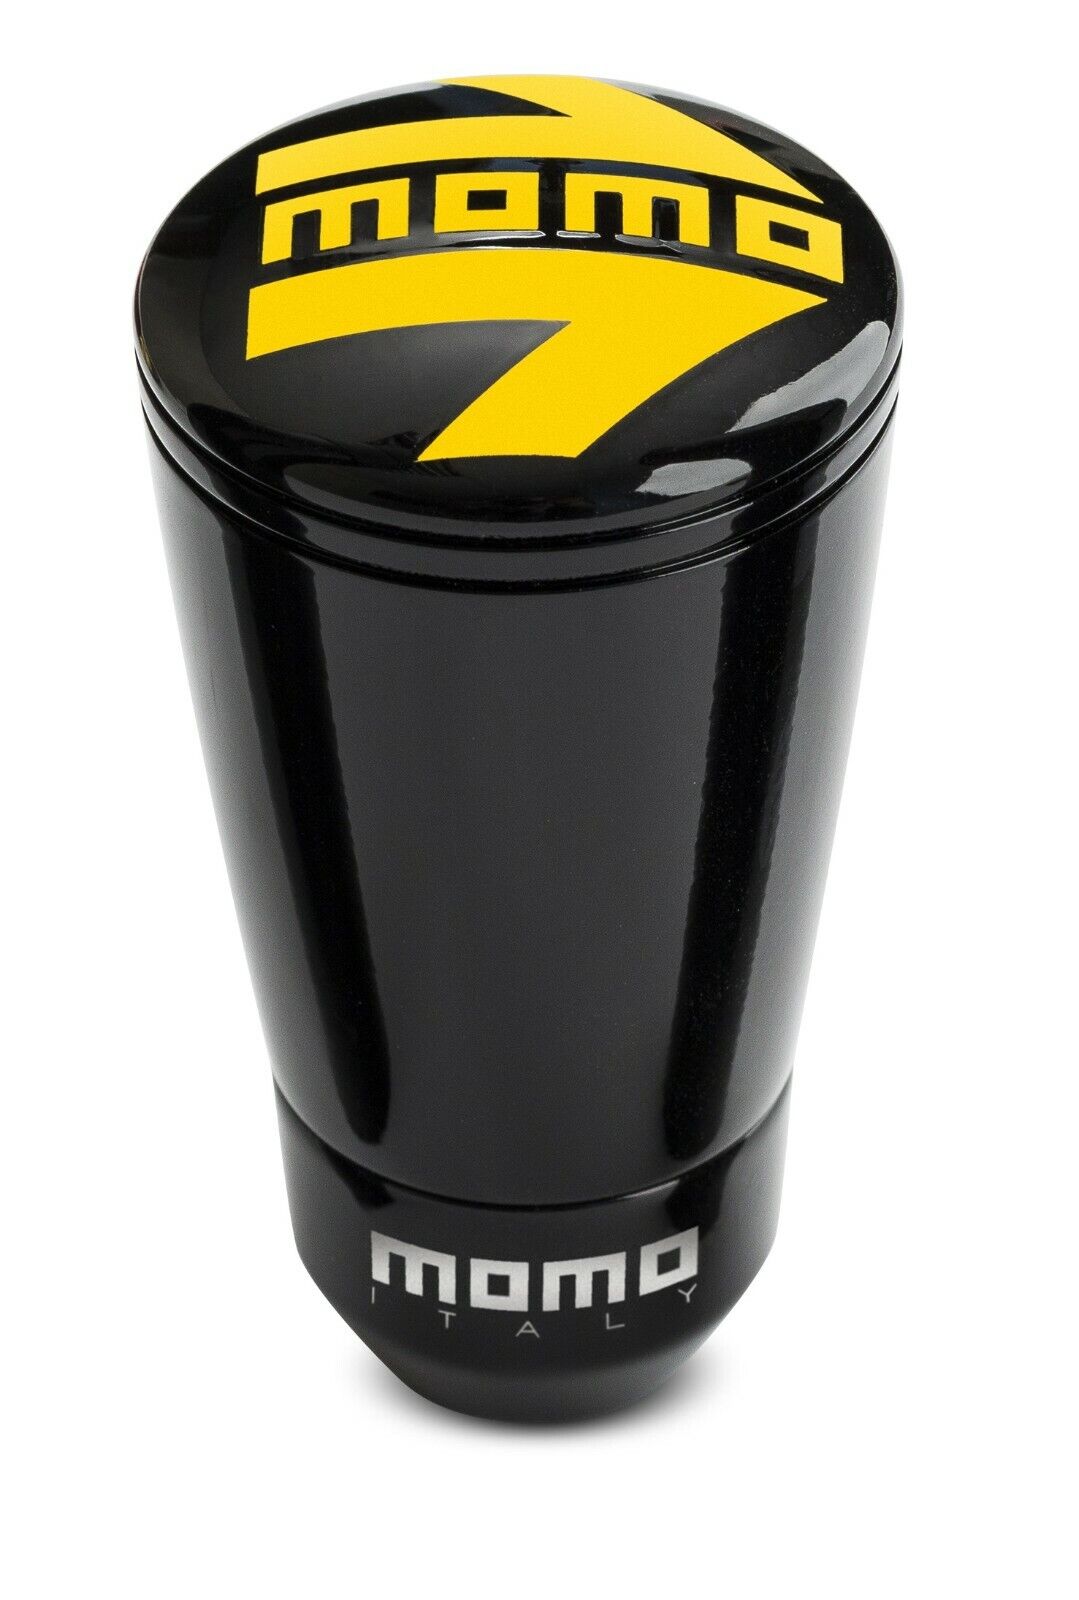 Momo Gear Shift Knob - SK 50 - GLOSSY BLACK ALUMINIUM